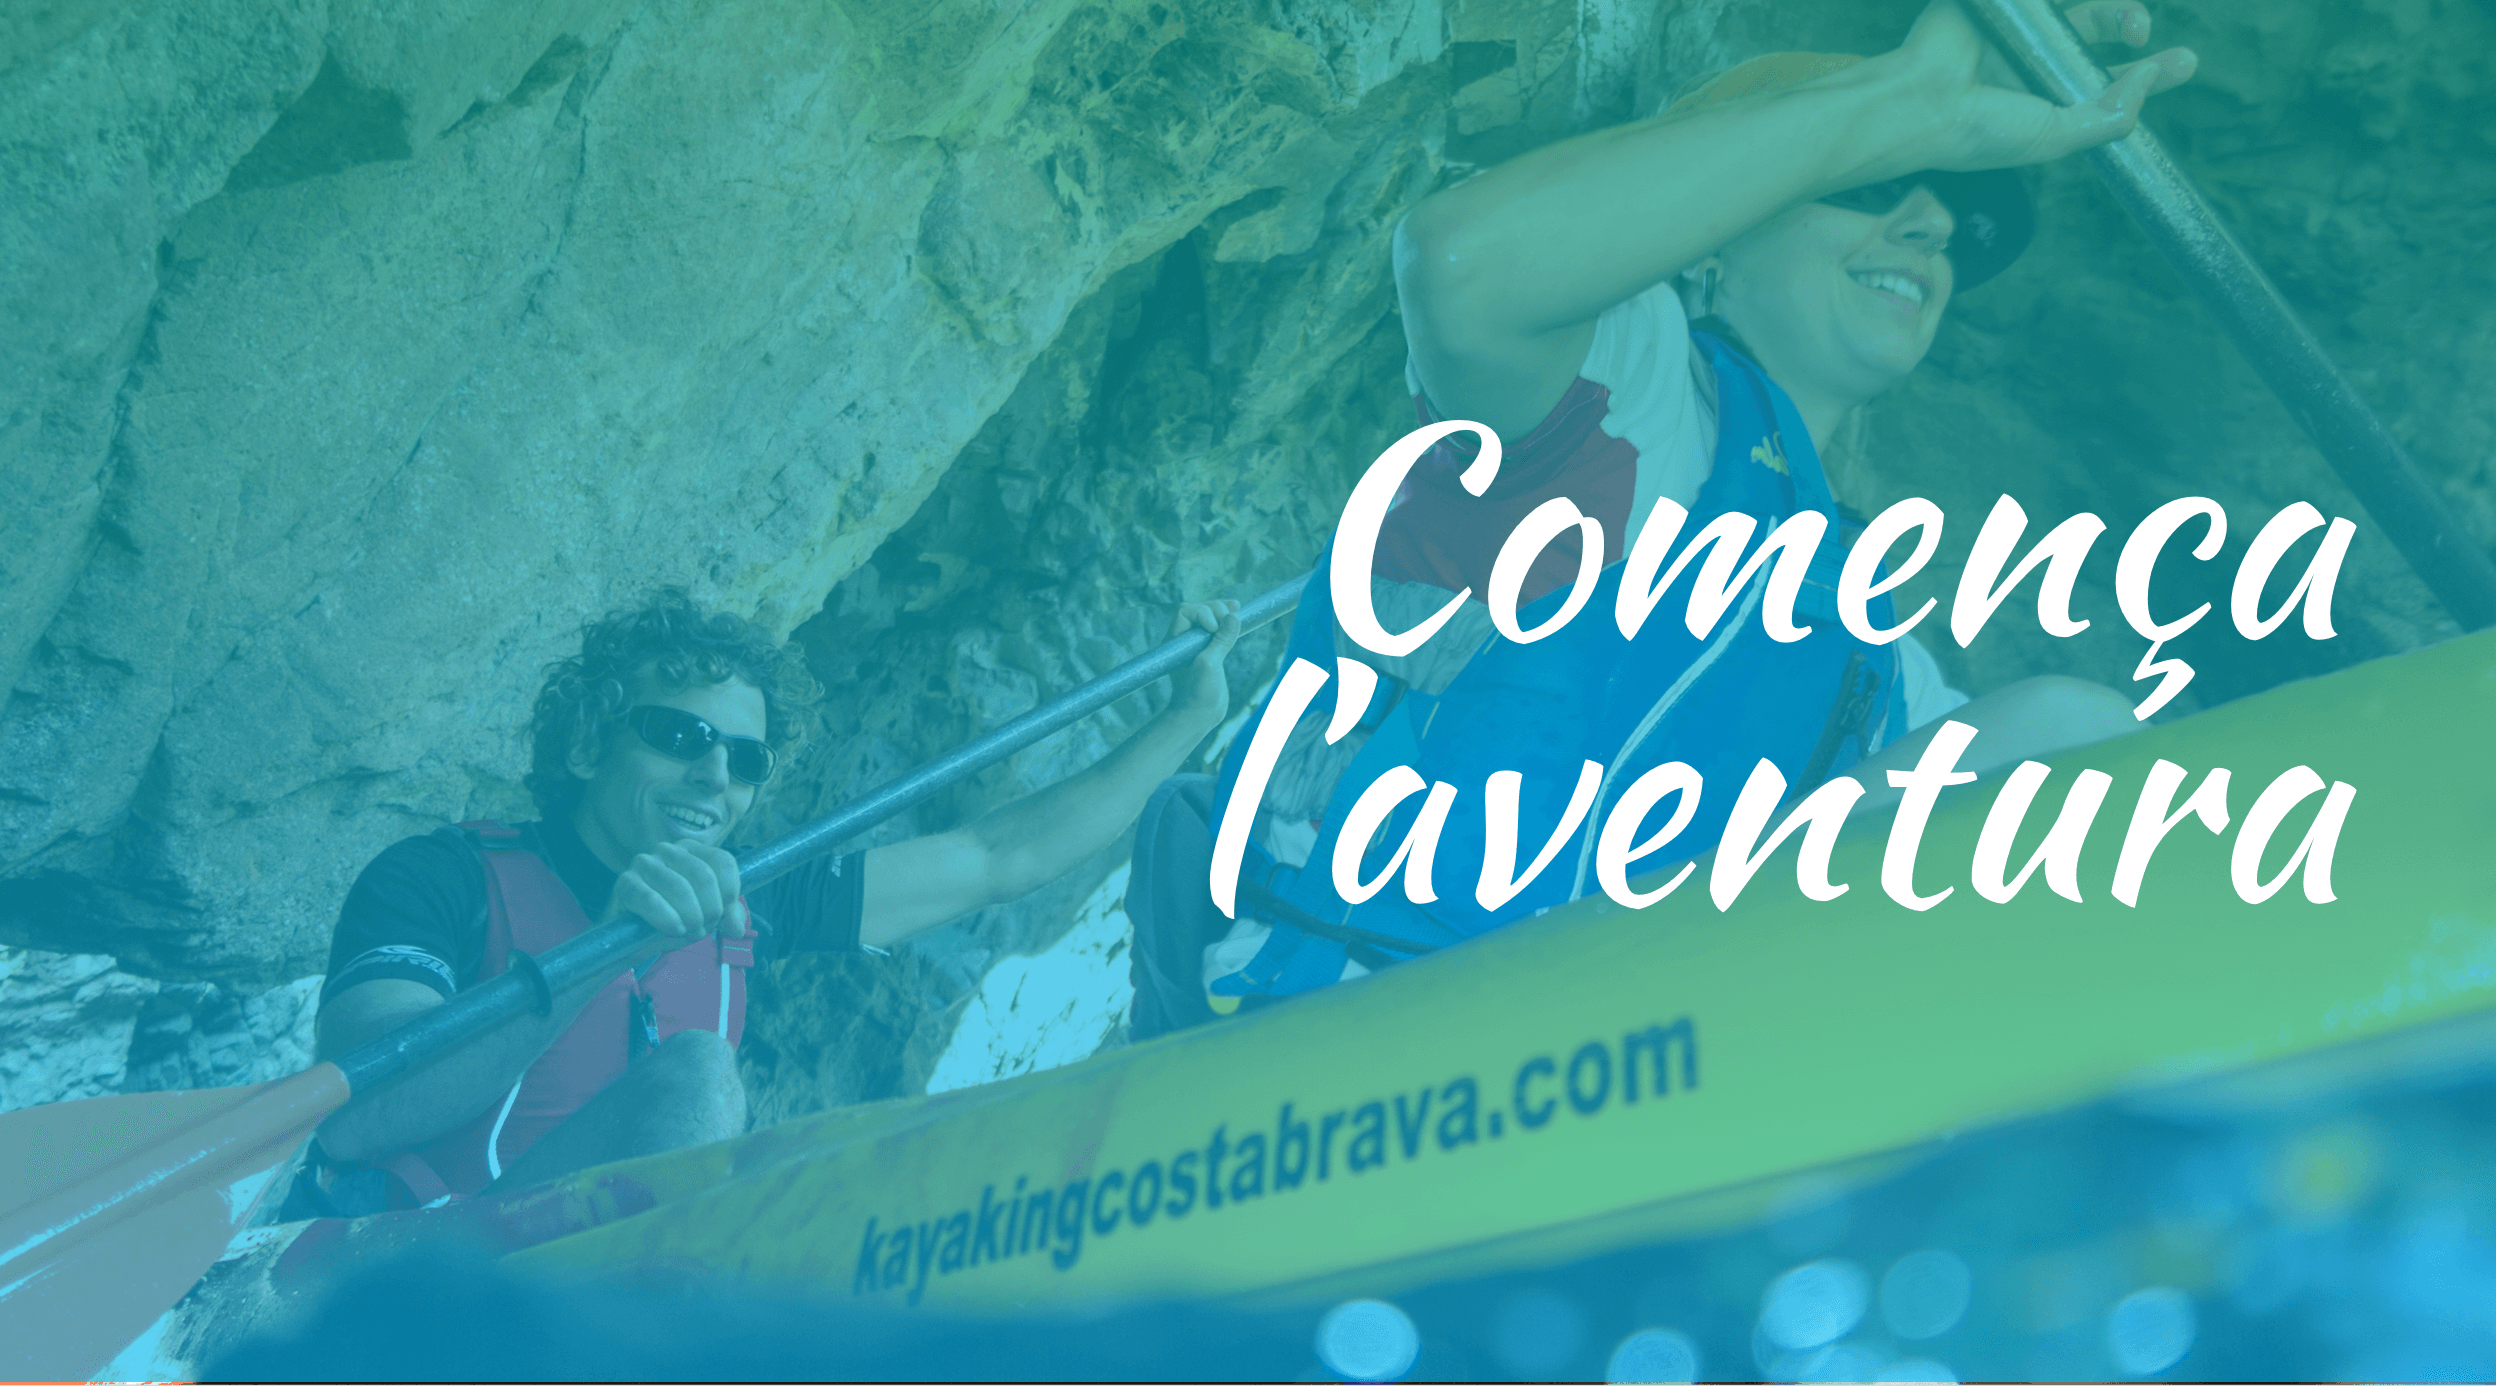 Web kayaking Costa Brava | Ideamatic